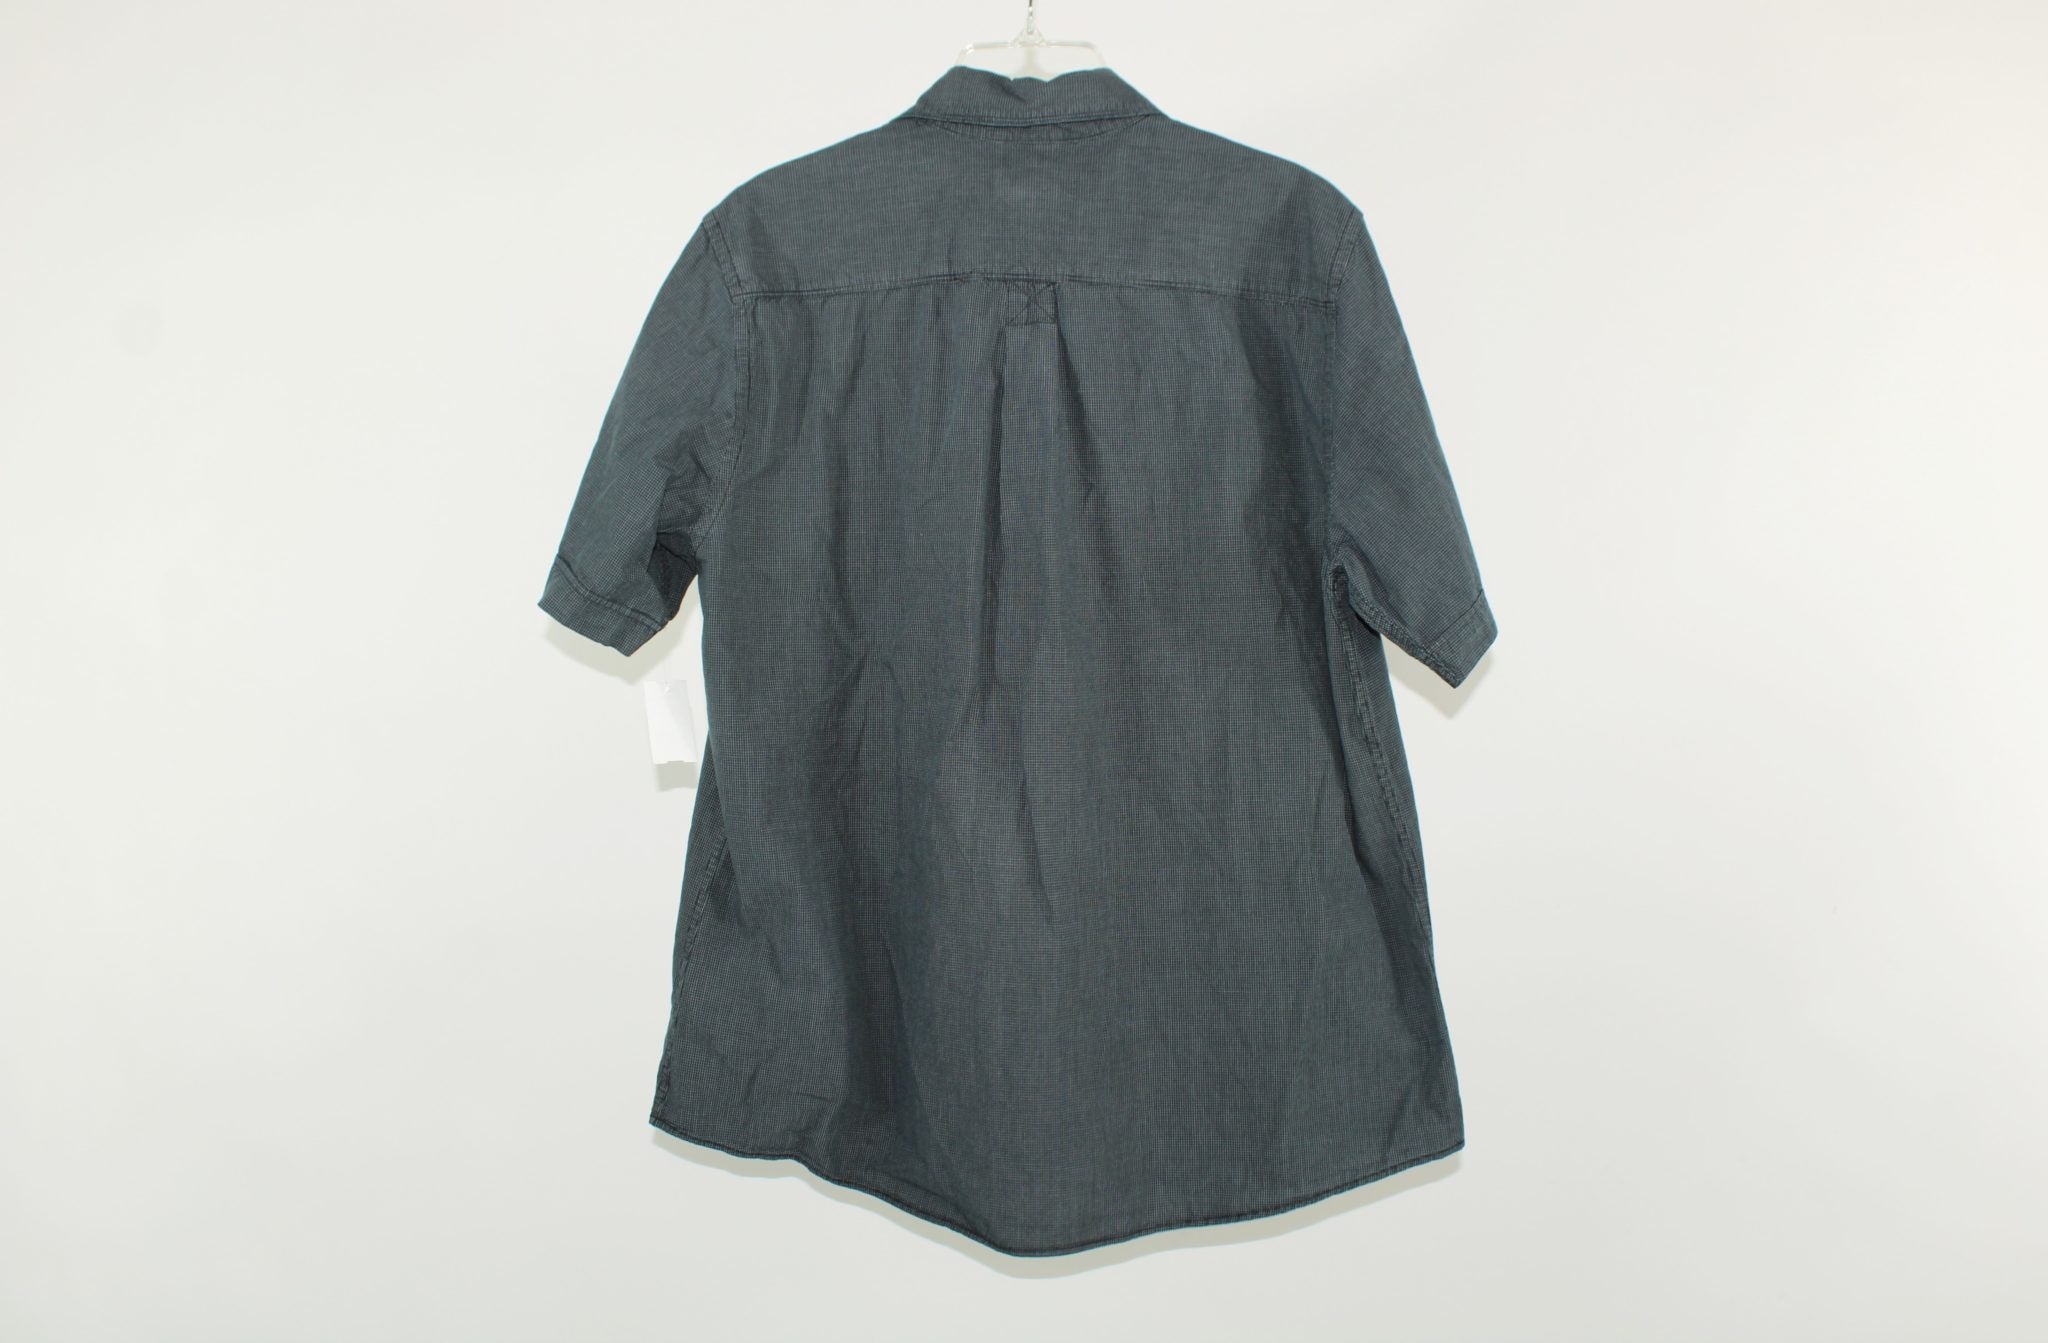 Dockers Gray Short Sleeve Shirt | Size L